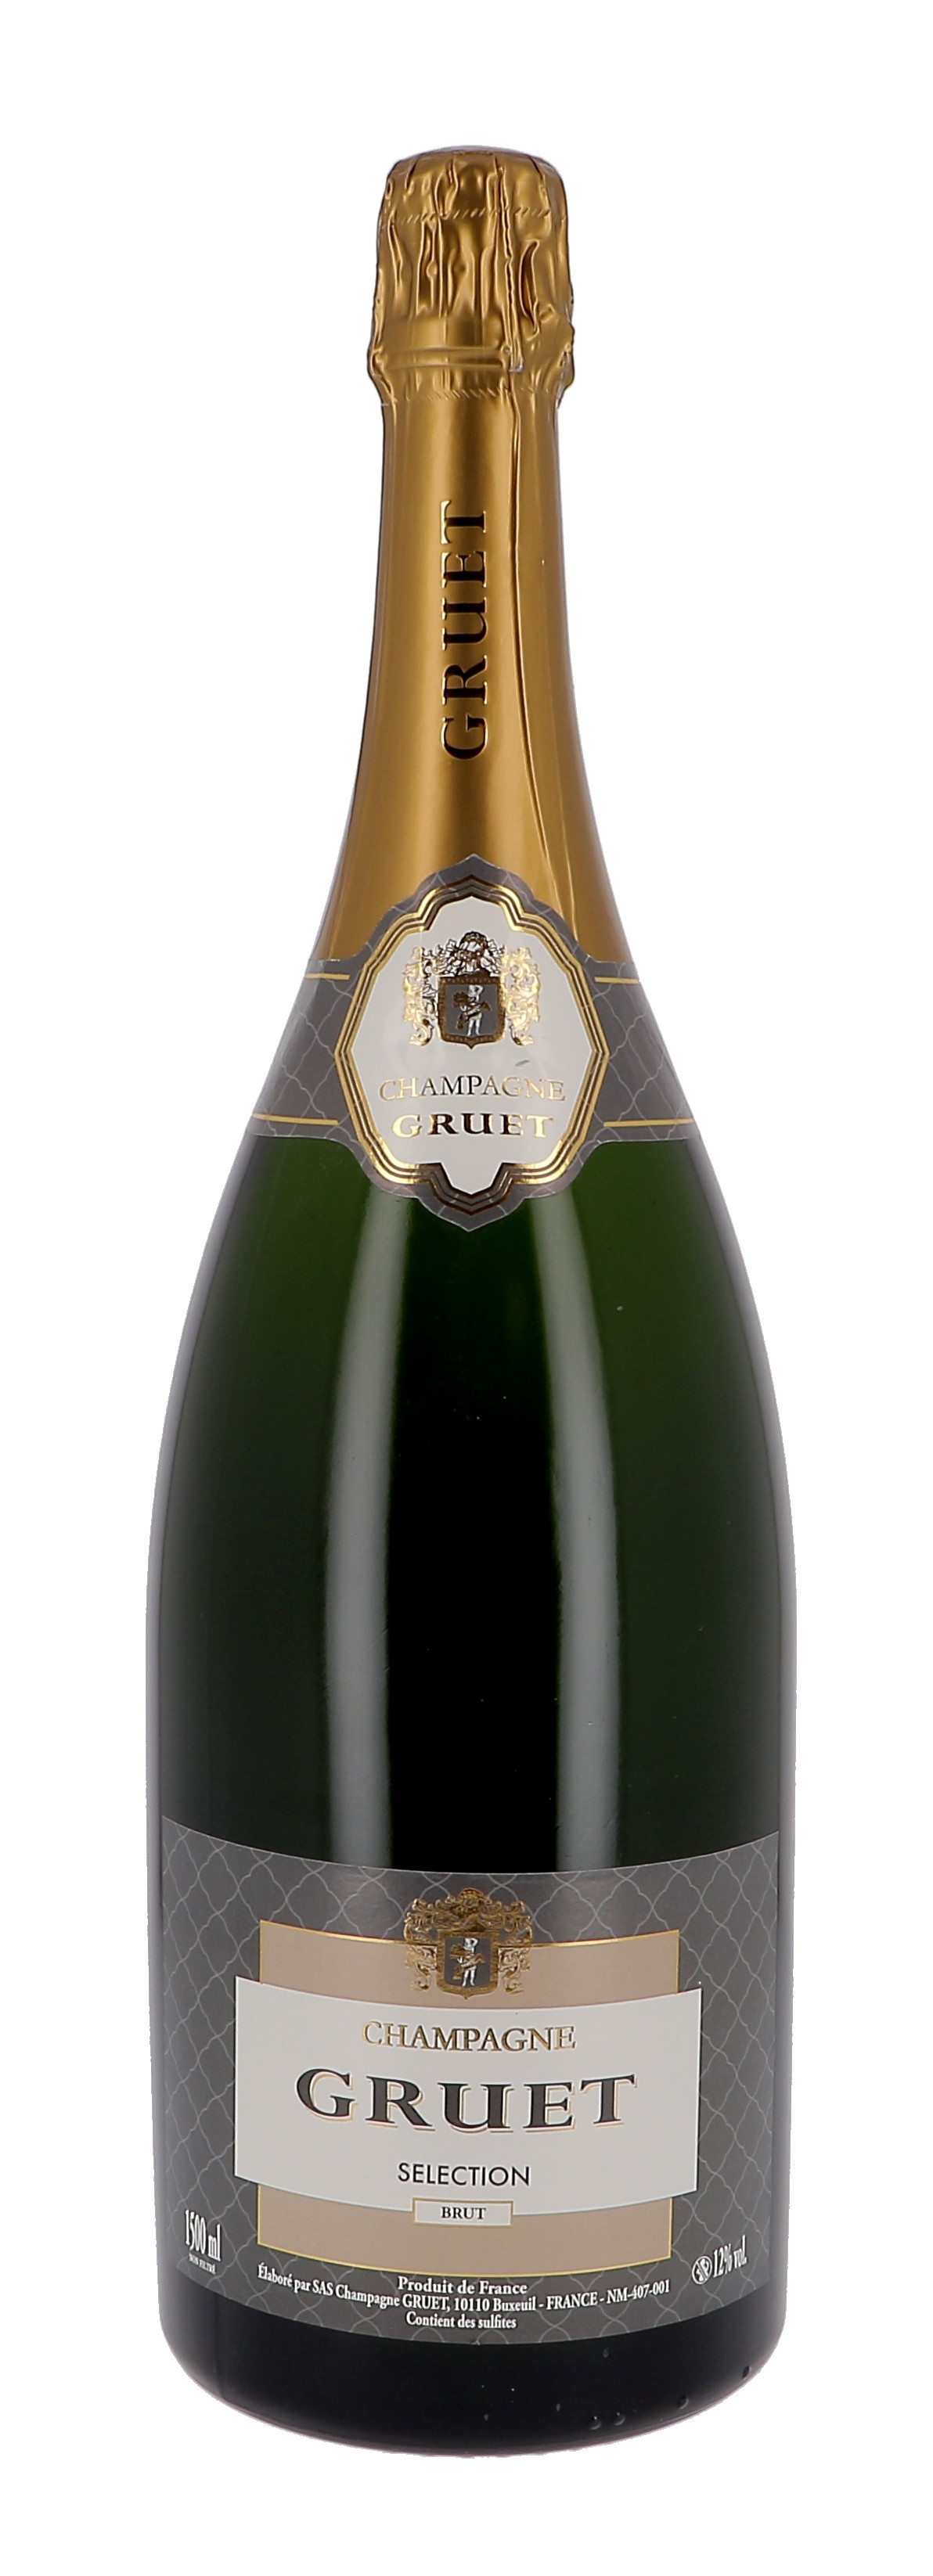 Champagne Gruet 75cl Brut Selection